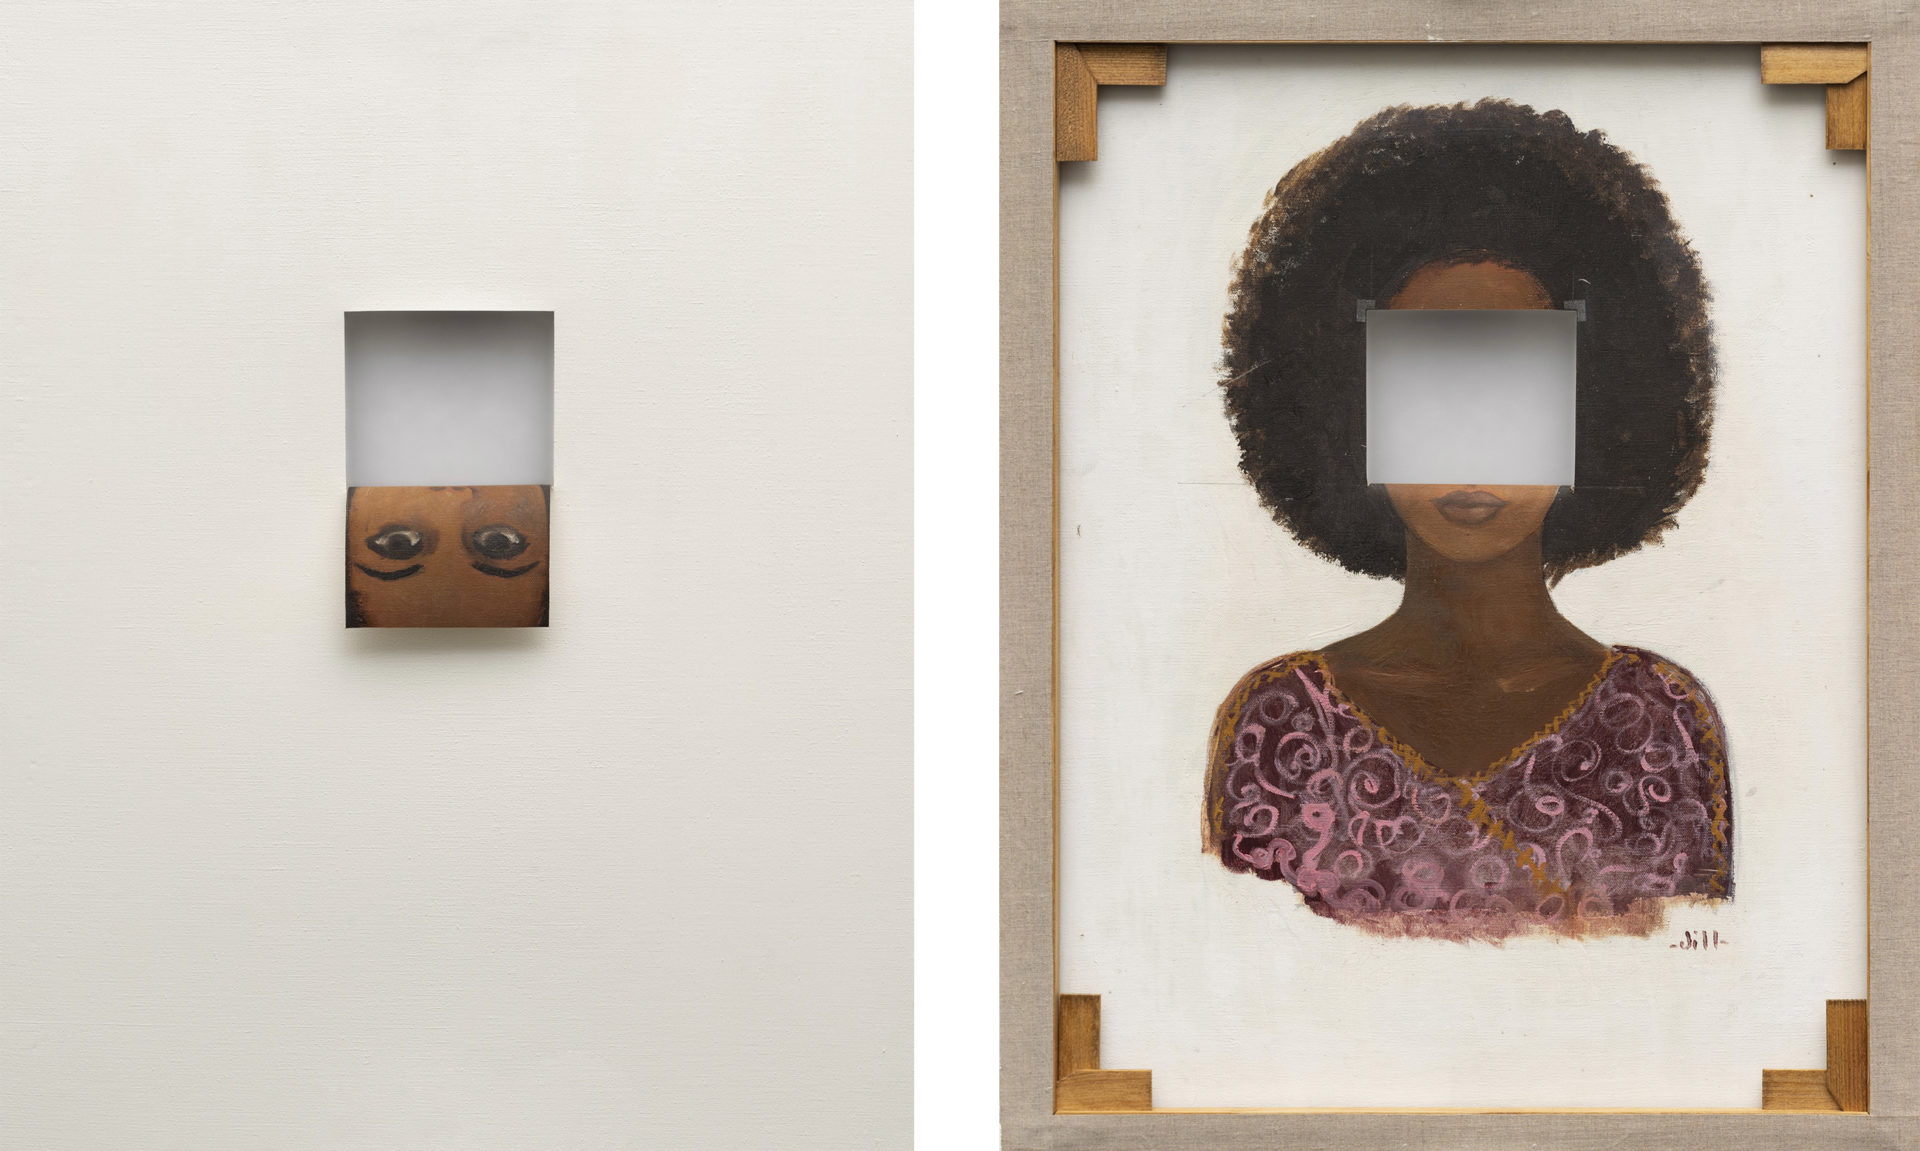 [Description: Valeska Soares, Duplaface (Branco de titânio), 2017. Oil and cutout on existing oil portrait, 71 x 56cm. Courtesy MASP]